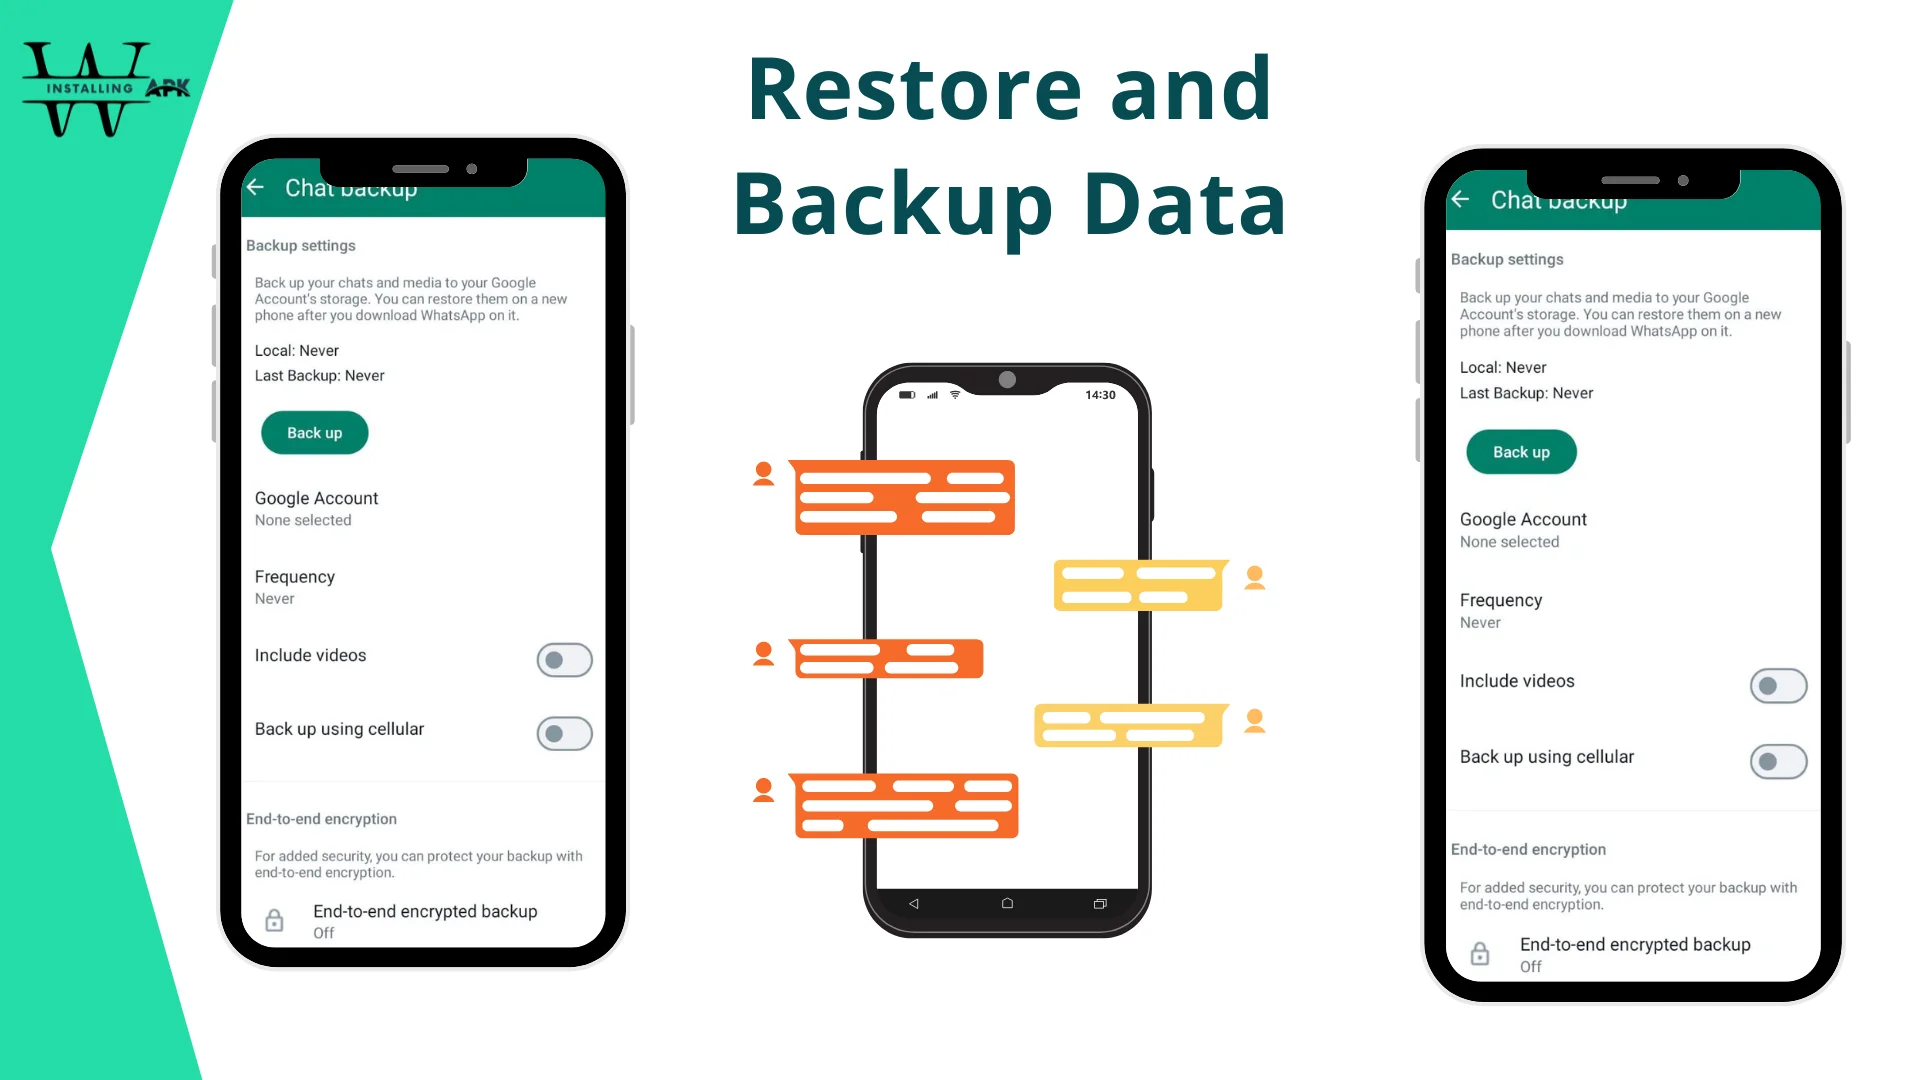 Restore and Backup Data